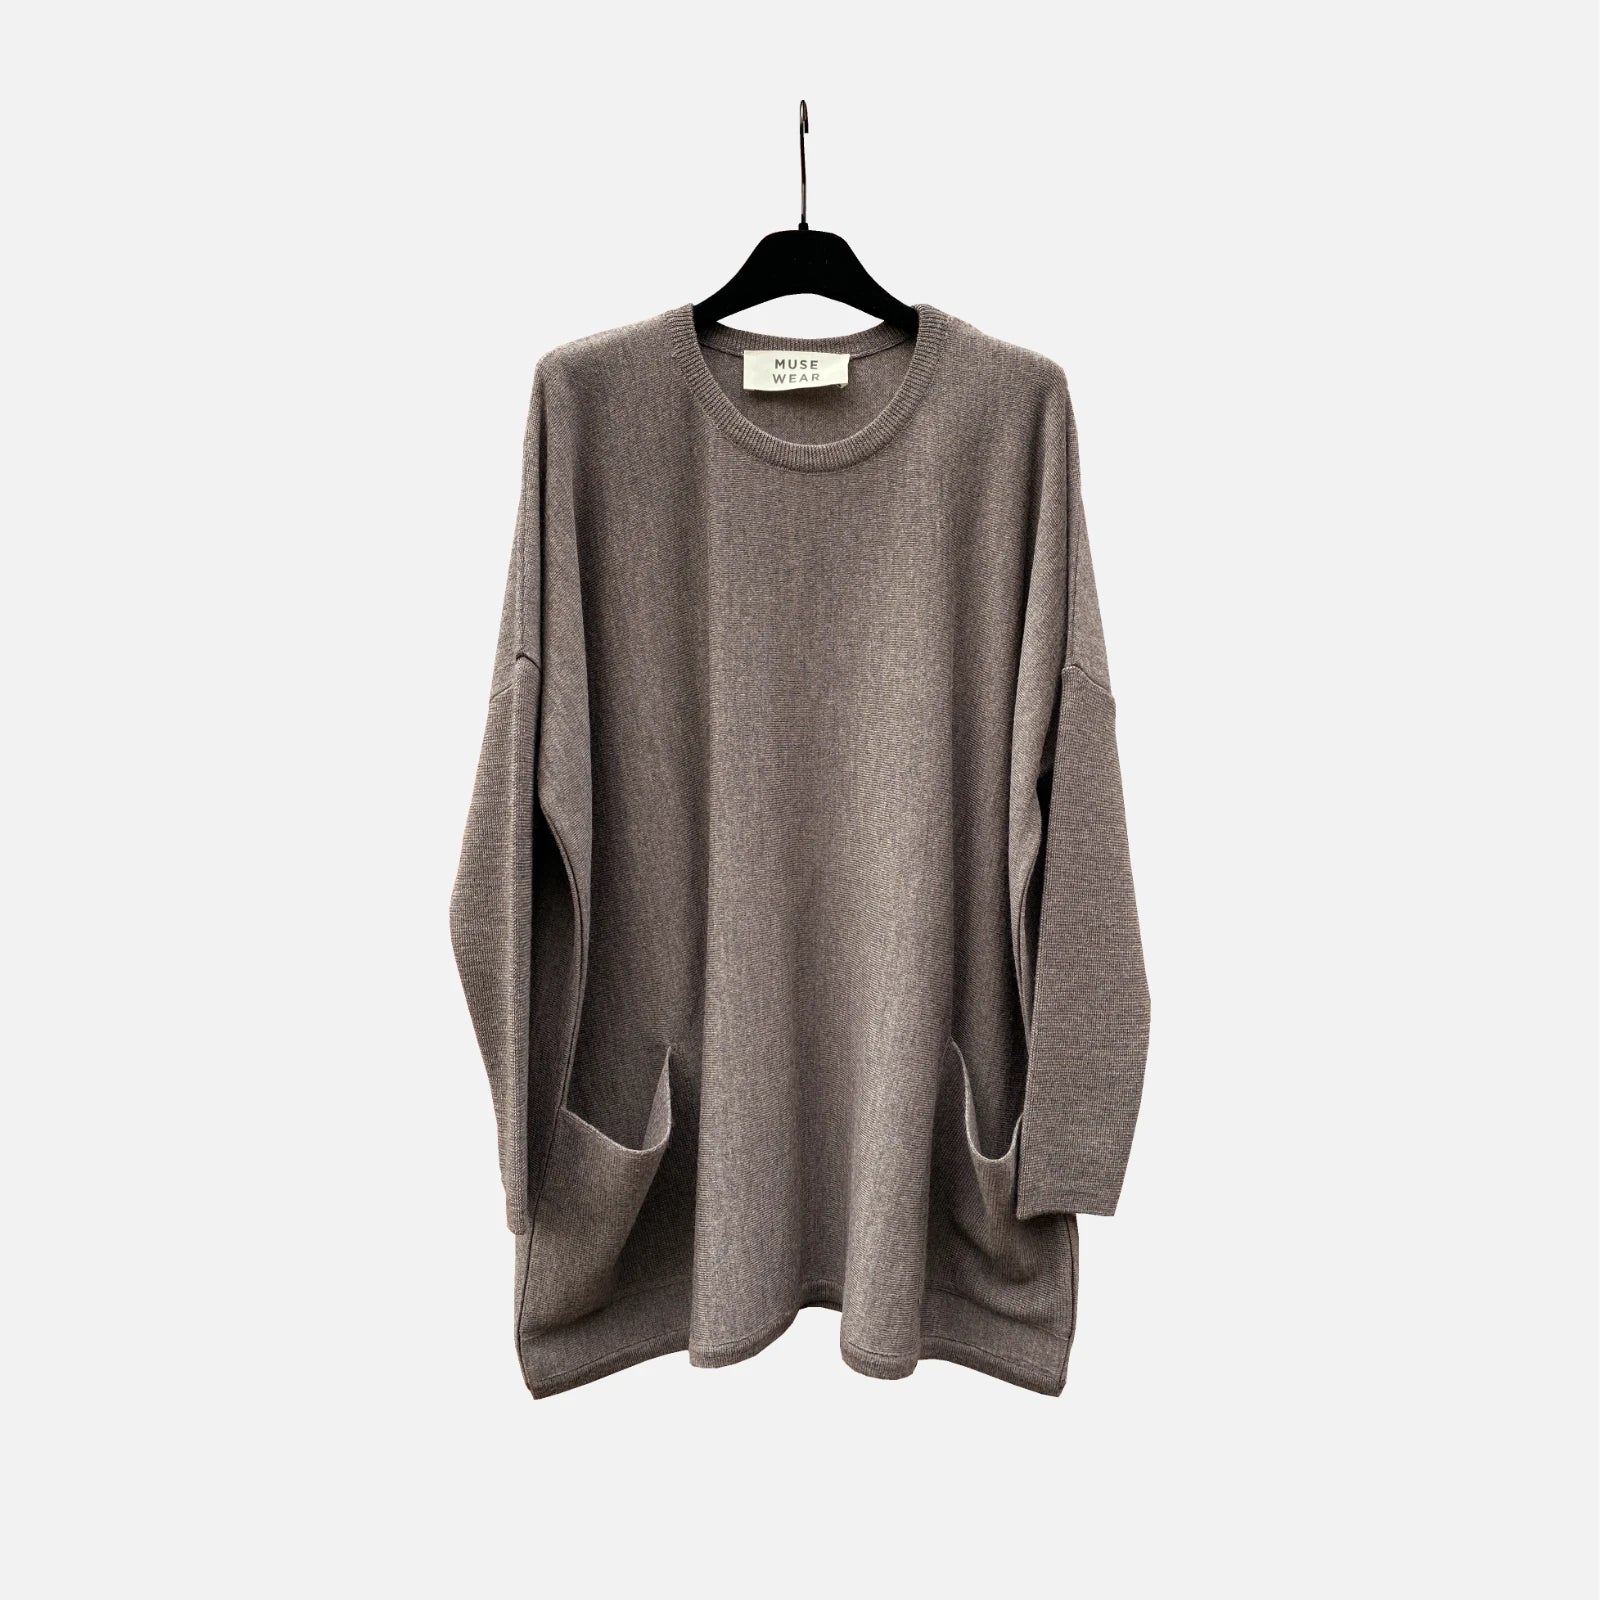 Agnete Merino Sweater fra Muse Wear i gråbrun